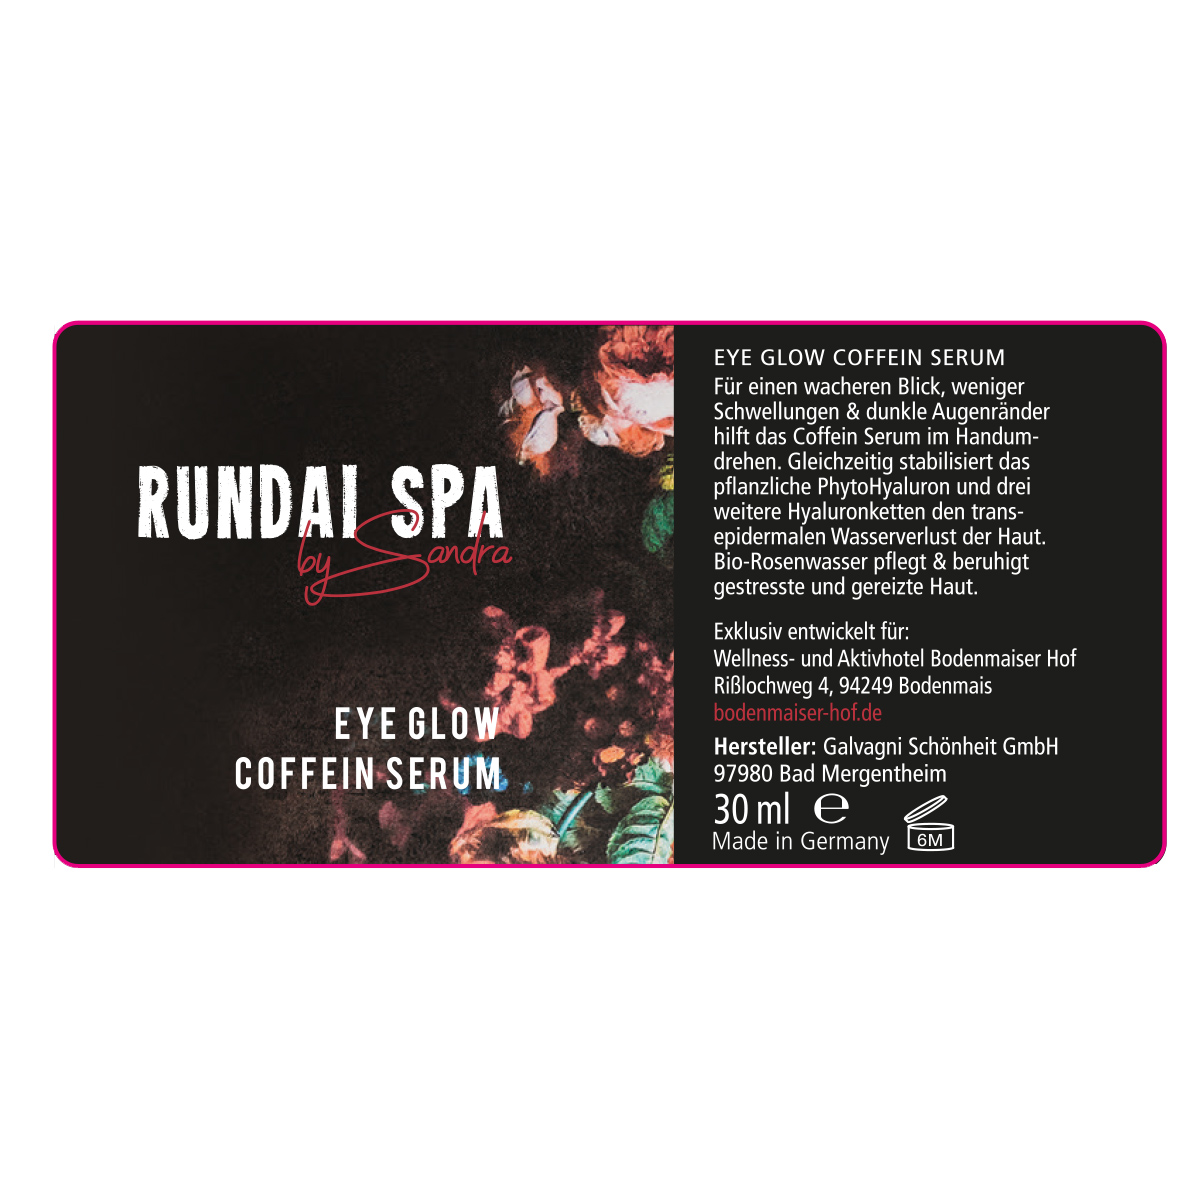 RUNDAI SPA - Eye Glow Coffein Serum